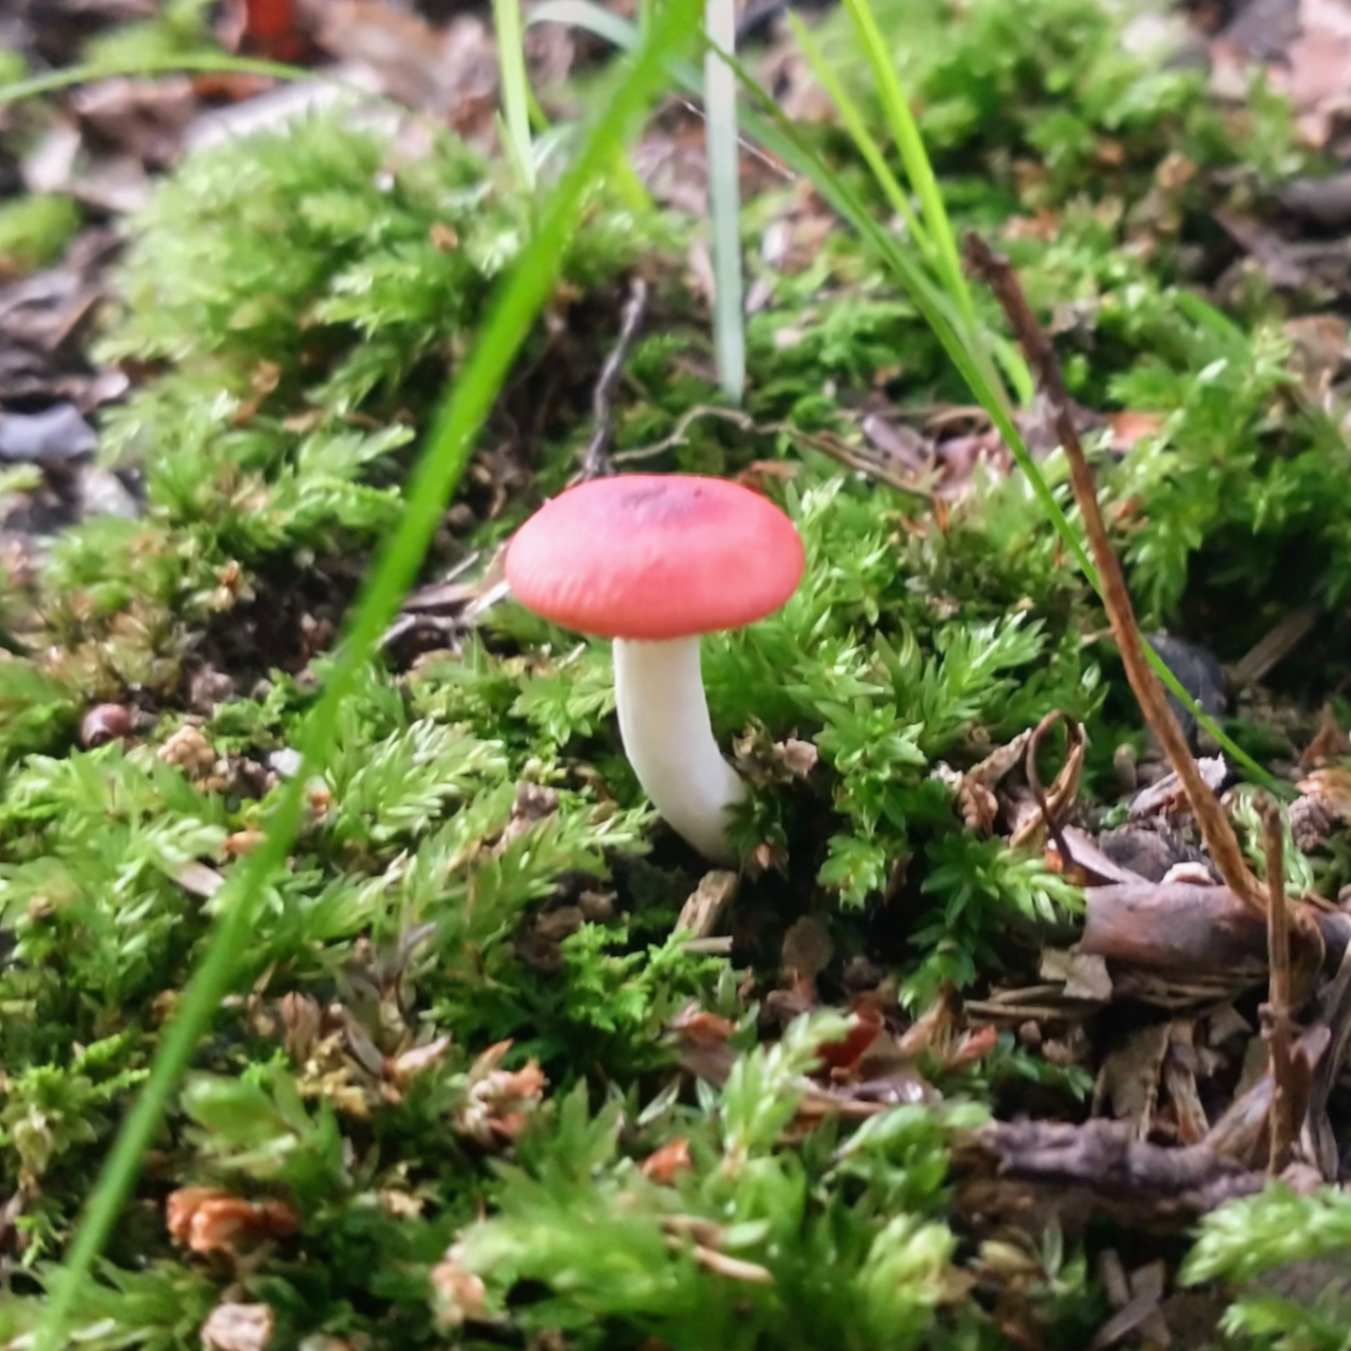 Possible Russula Mushroom